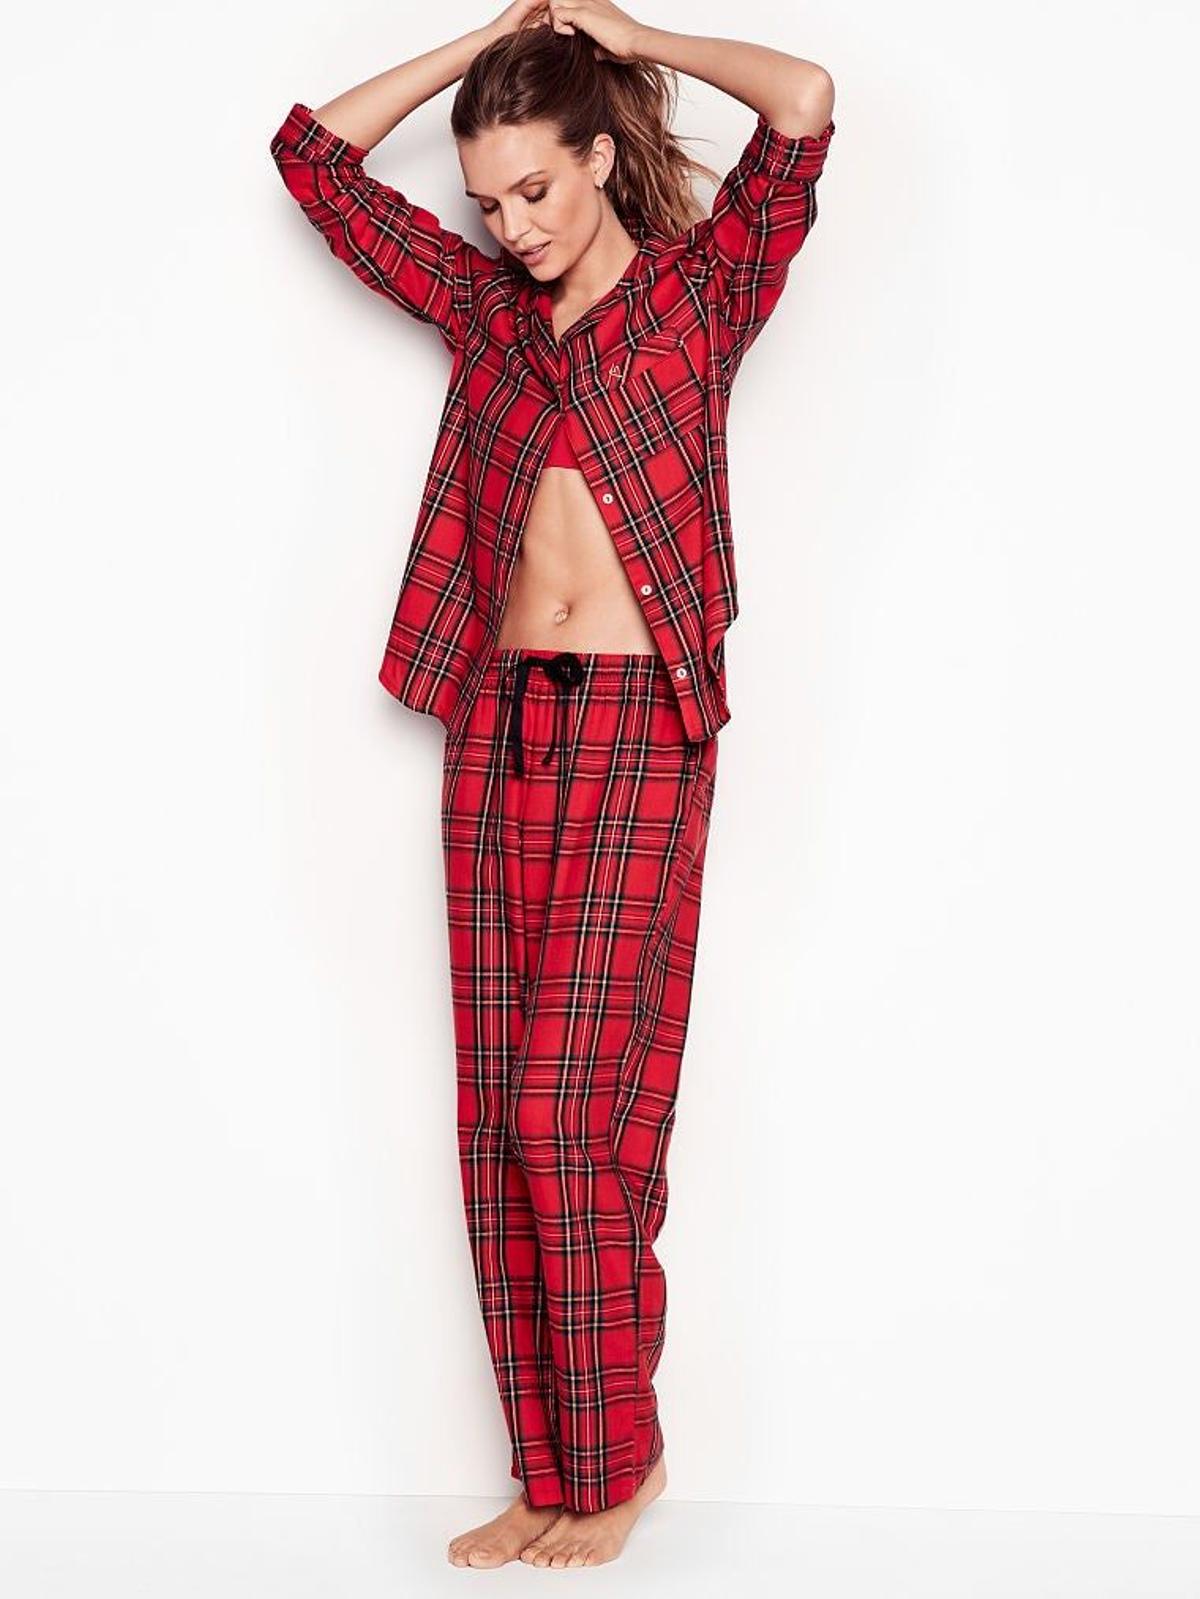 Pijama a cuadros de Victoria's Secret (Precio: 64,19 euros)